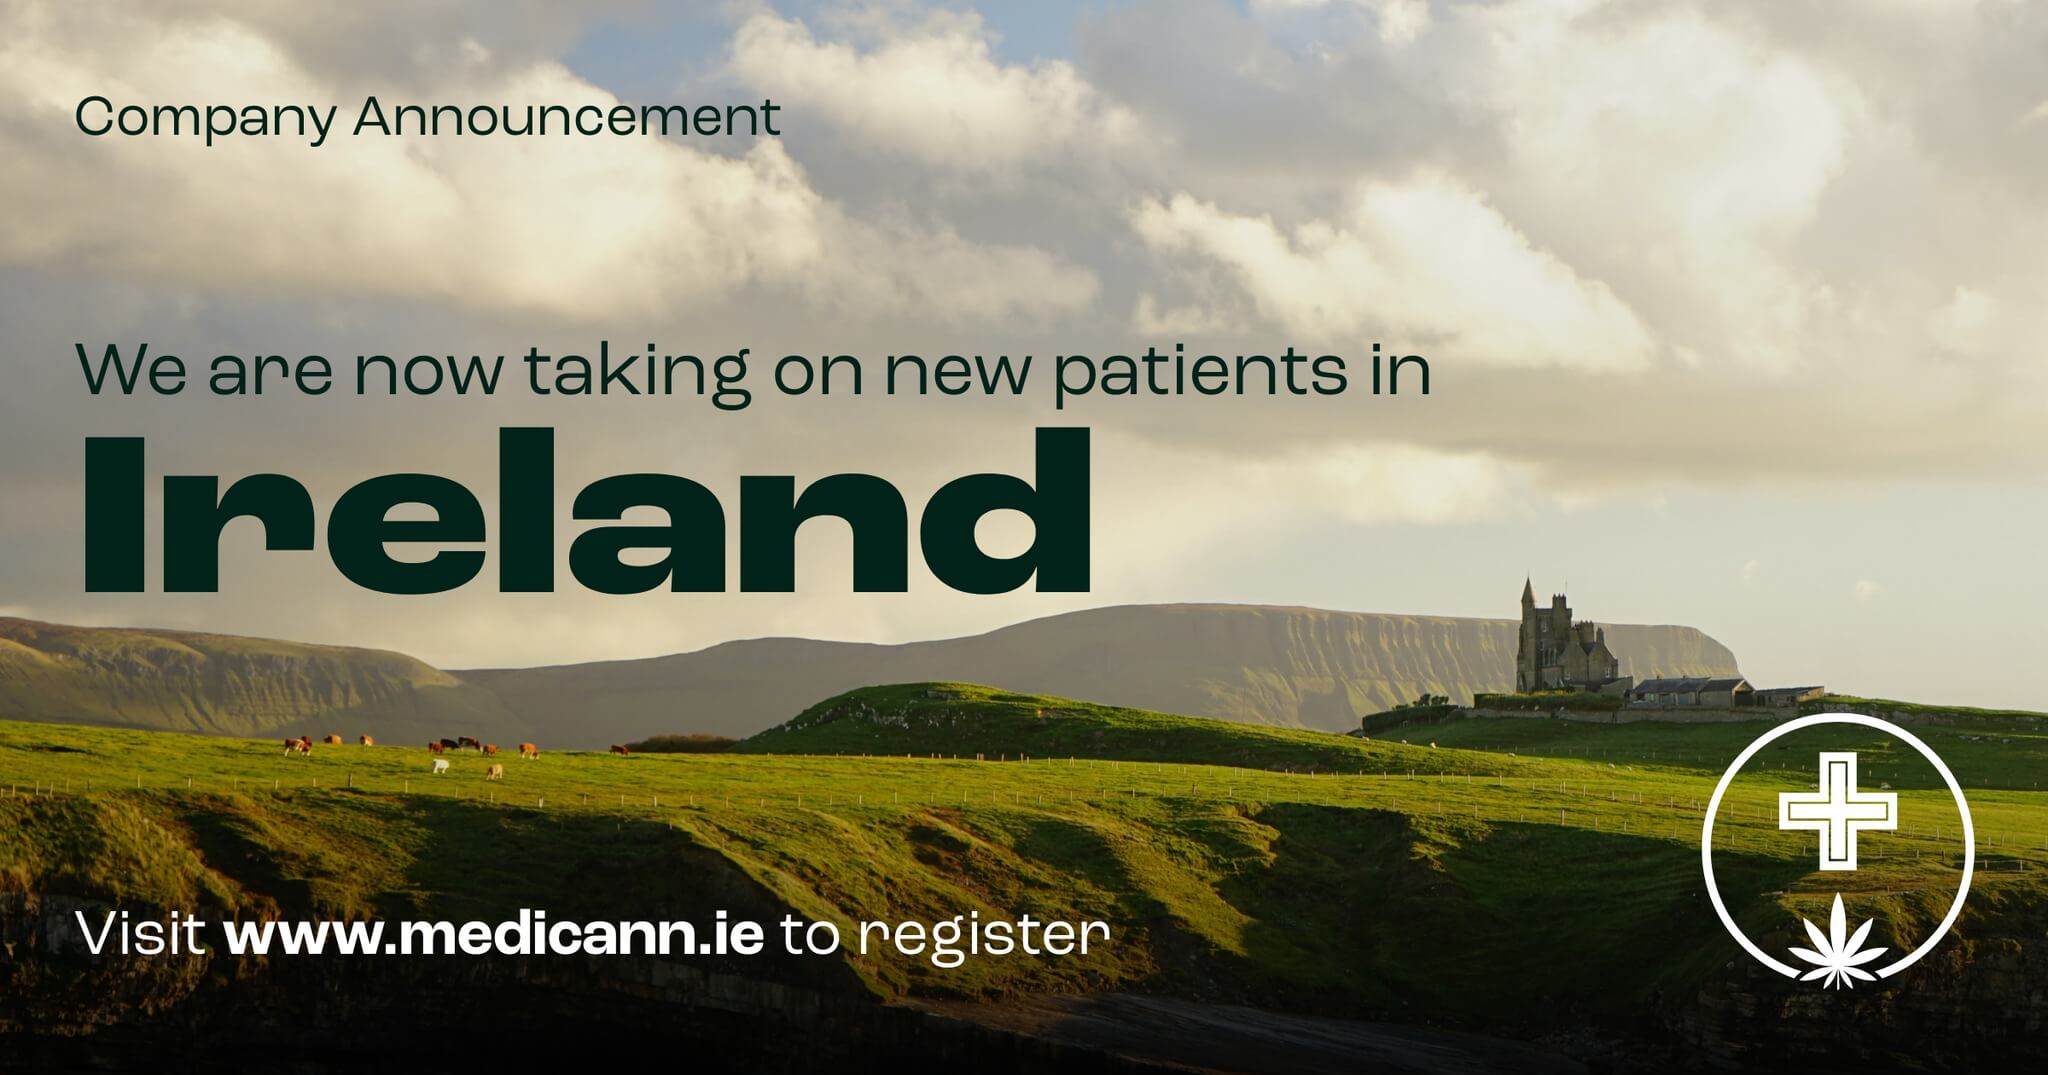 Medicann Ireland